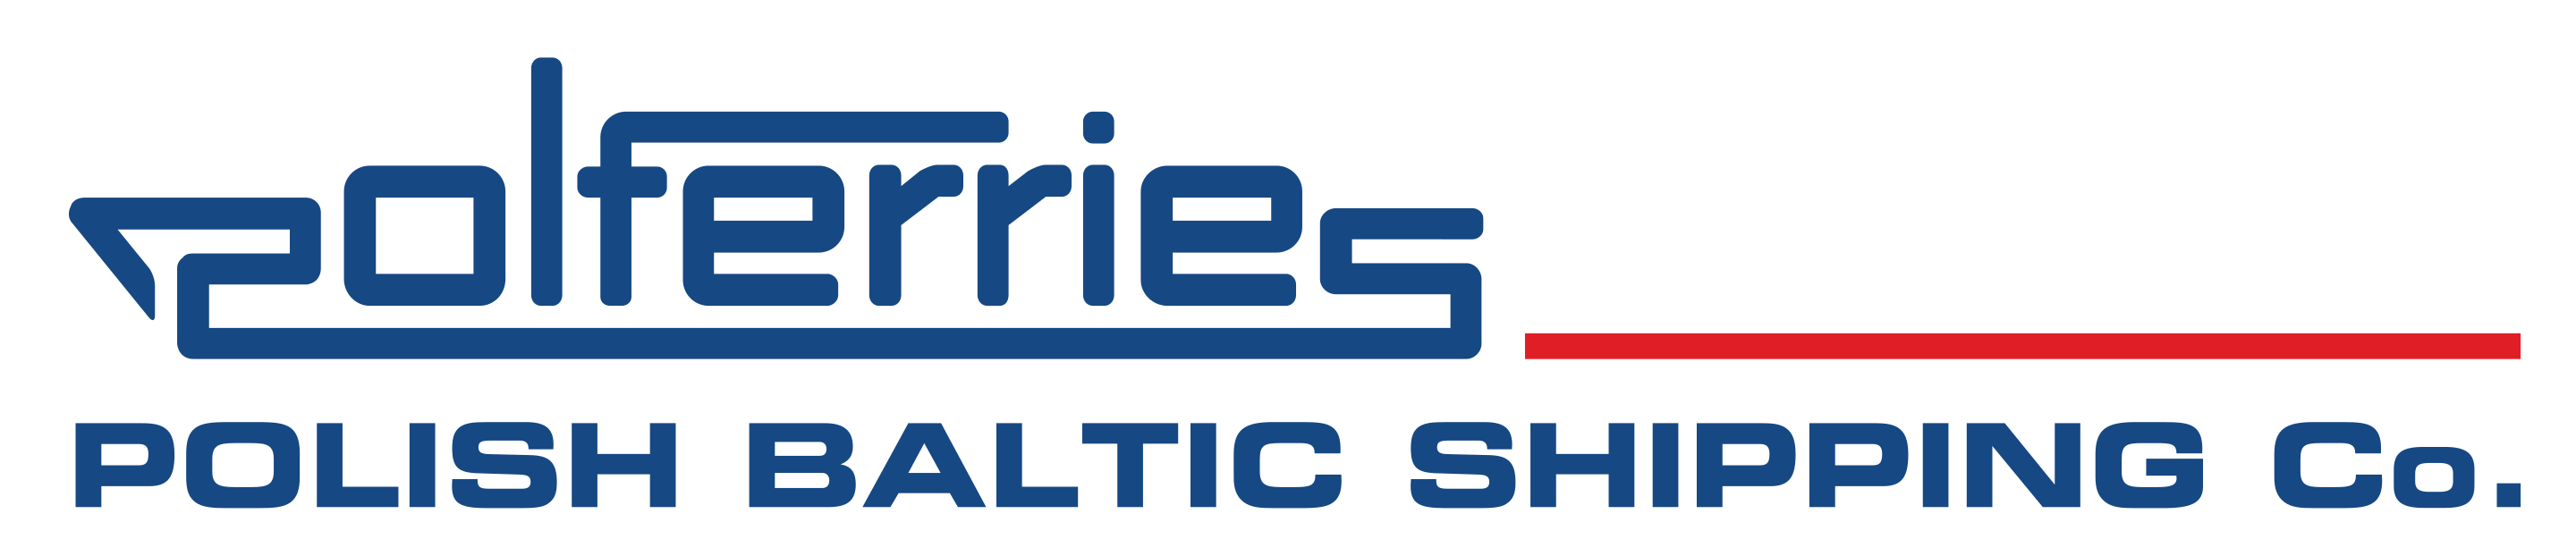 Logo Polferries